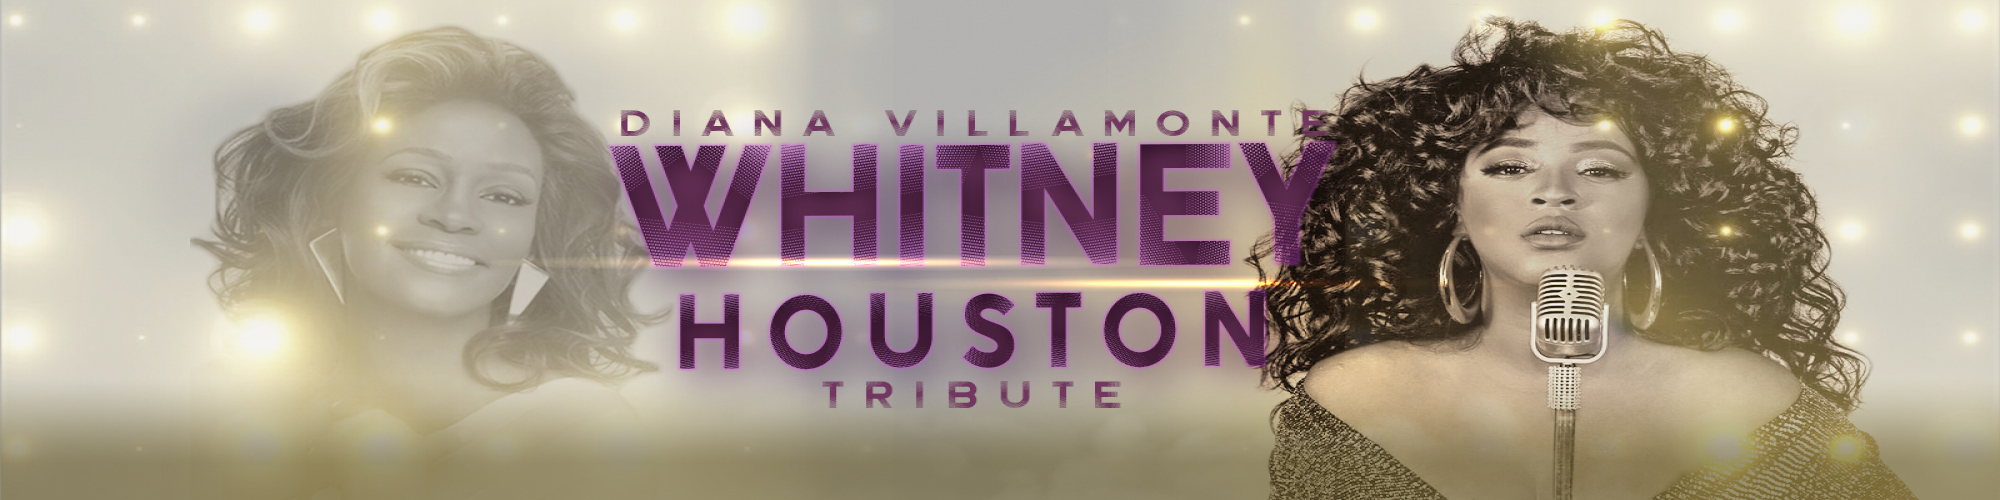 WHITNEY HOUSTON - starring Diana Villamonte (Main Stage)